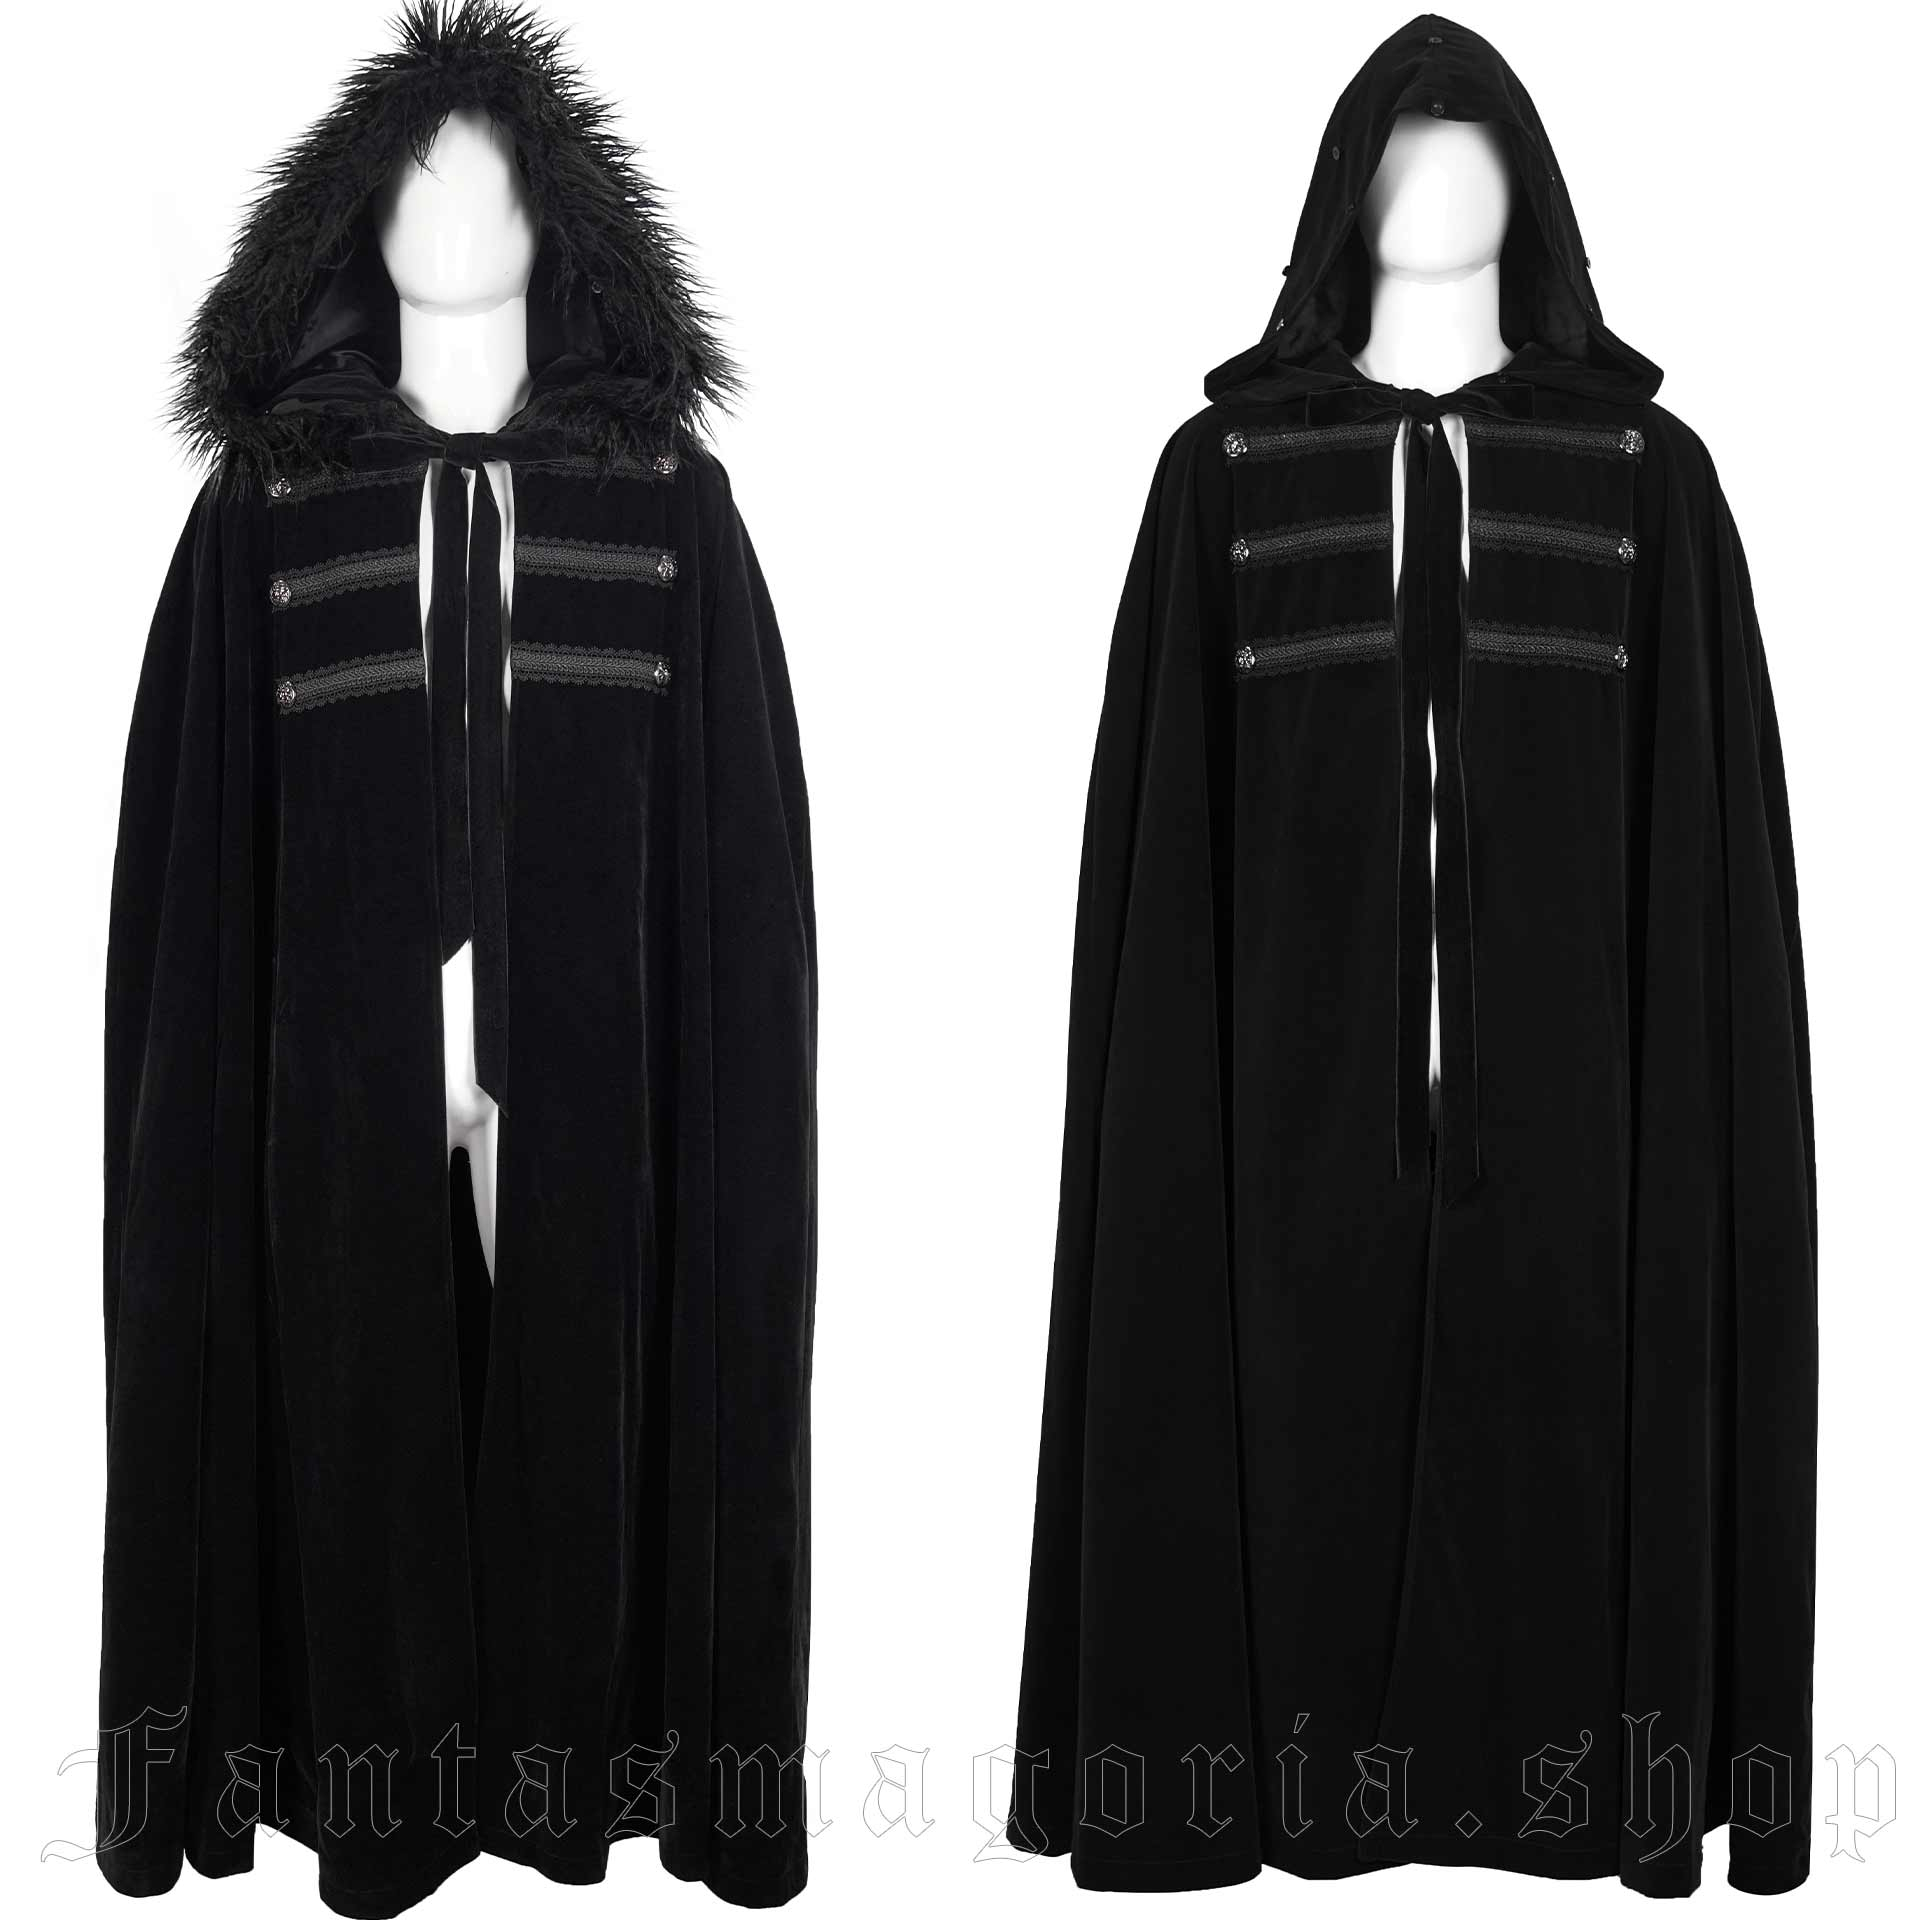 Grimoire Black Cloak CA02601/BK by Devil Fashion brand